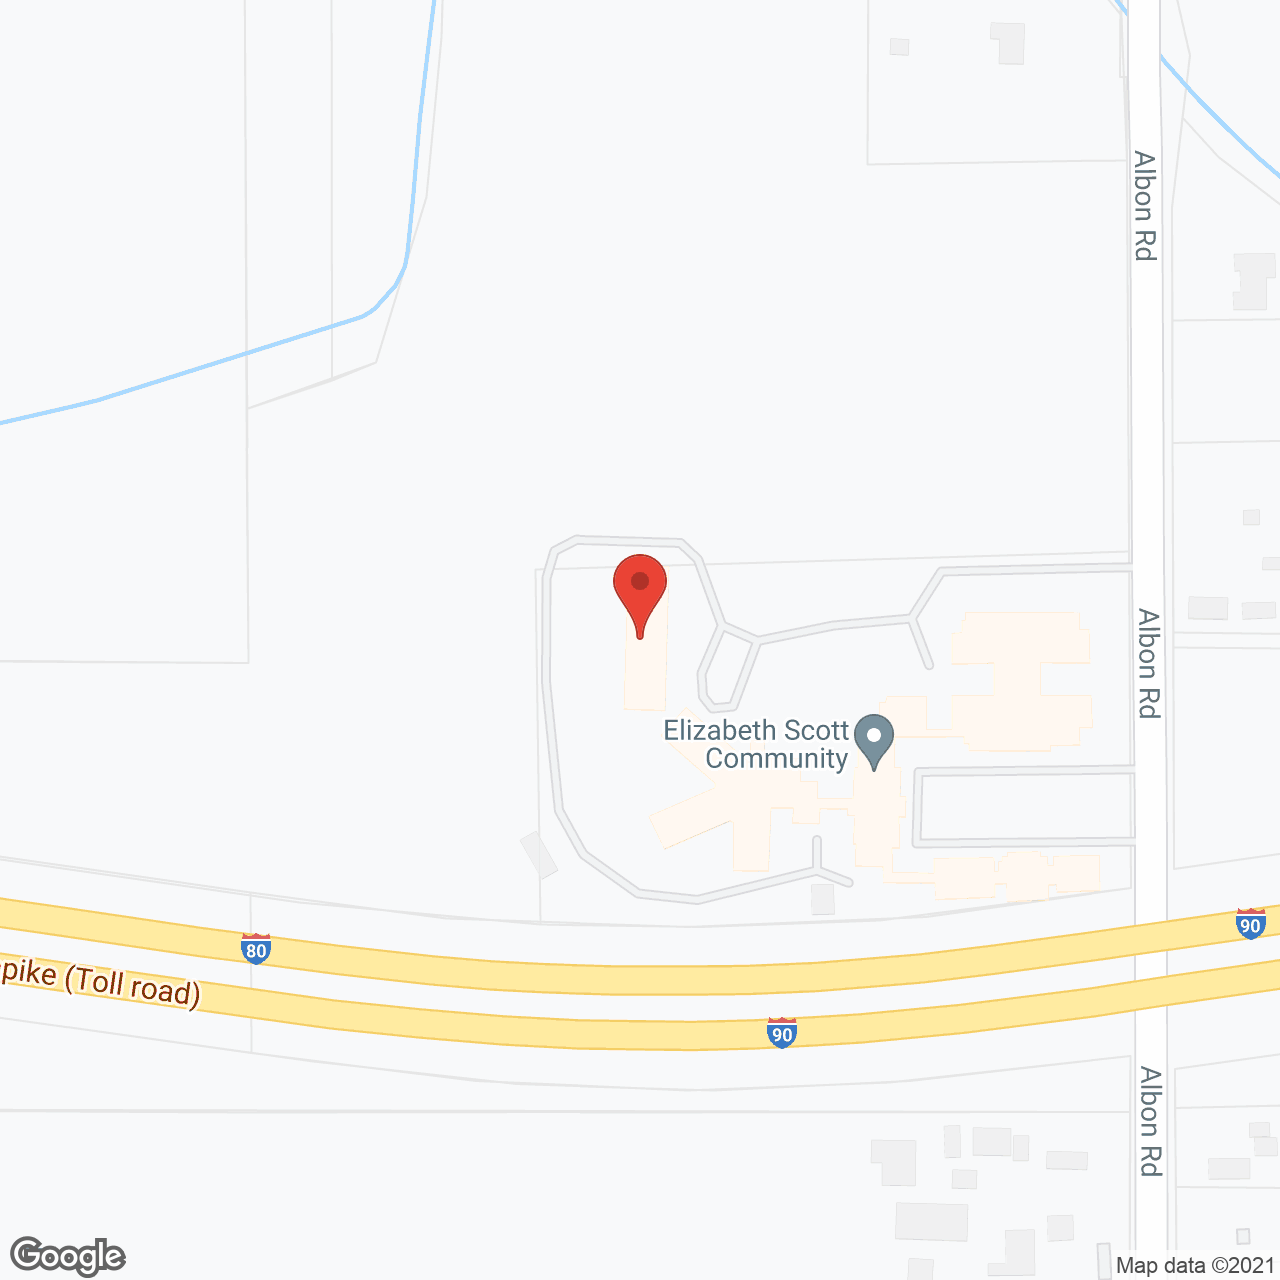 Elizabeth Scott Community in google map